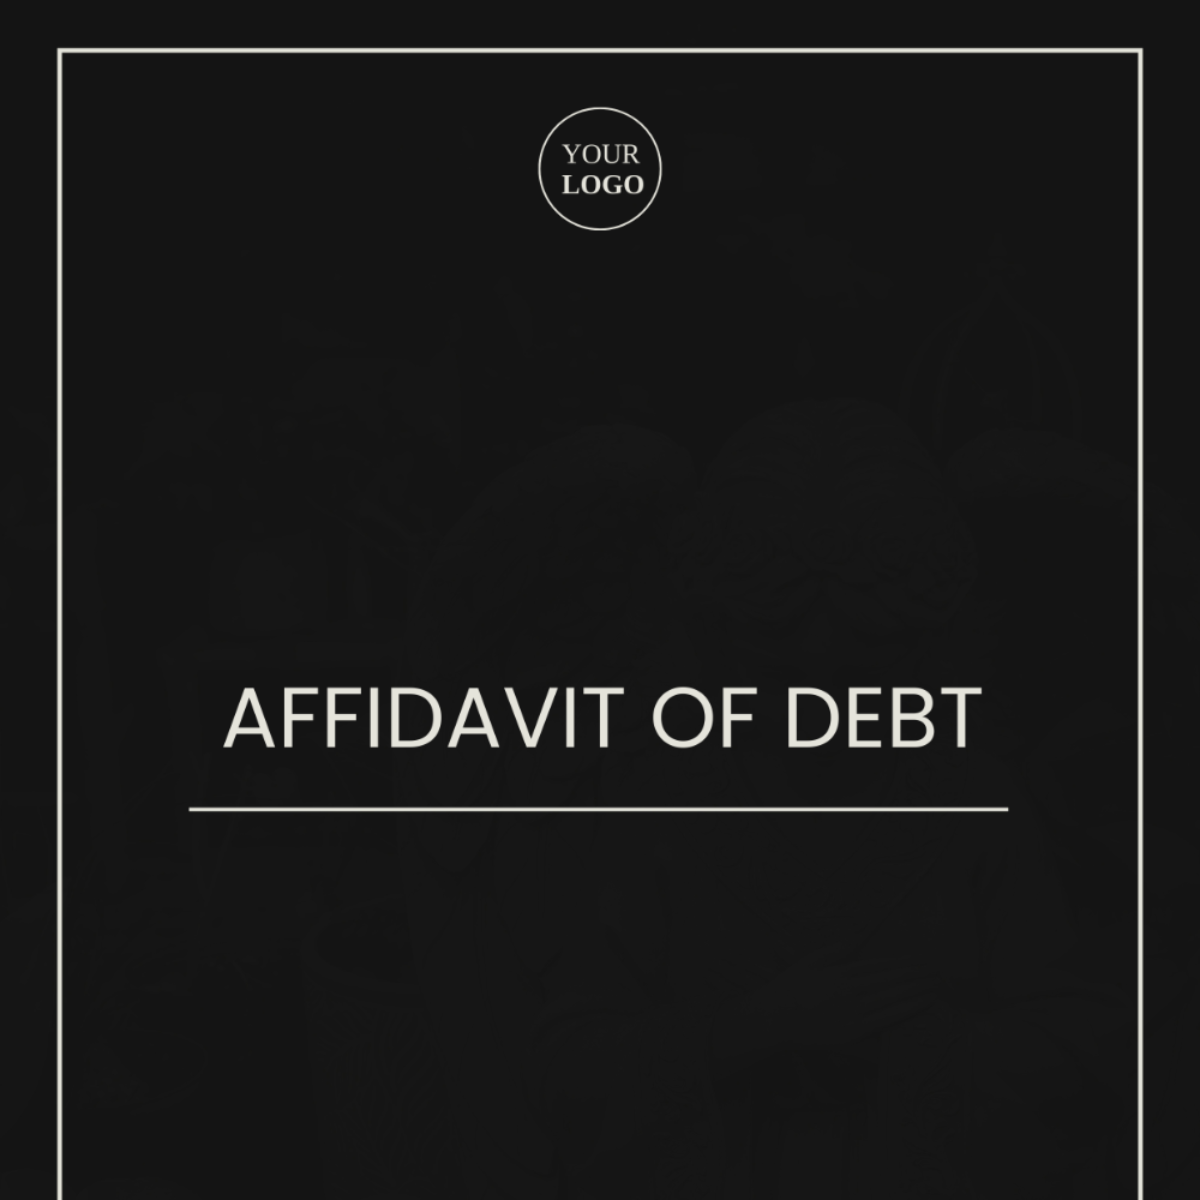 Affidavit of Debt Template